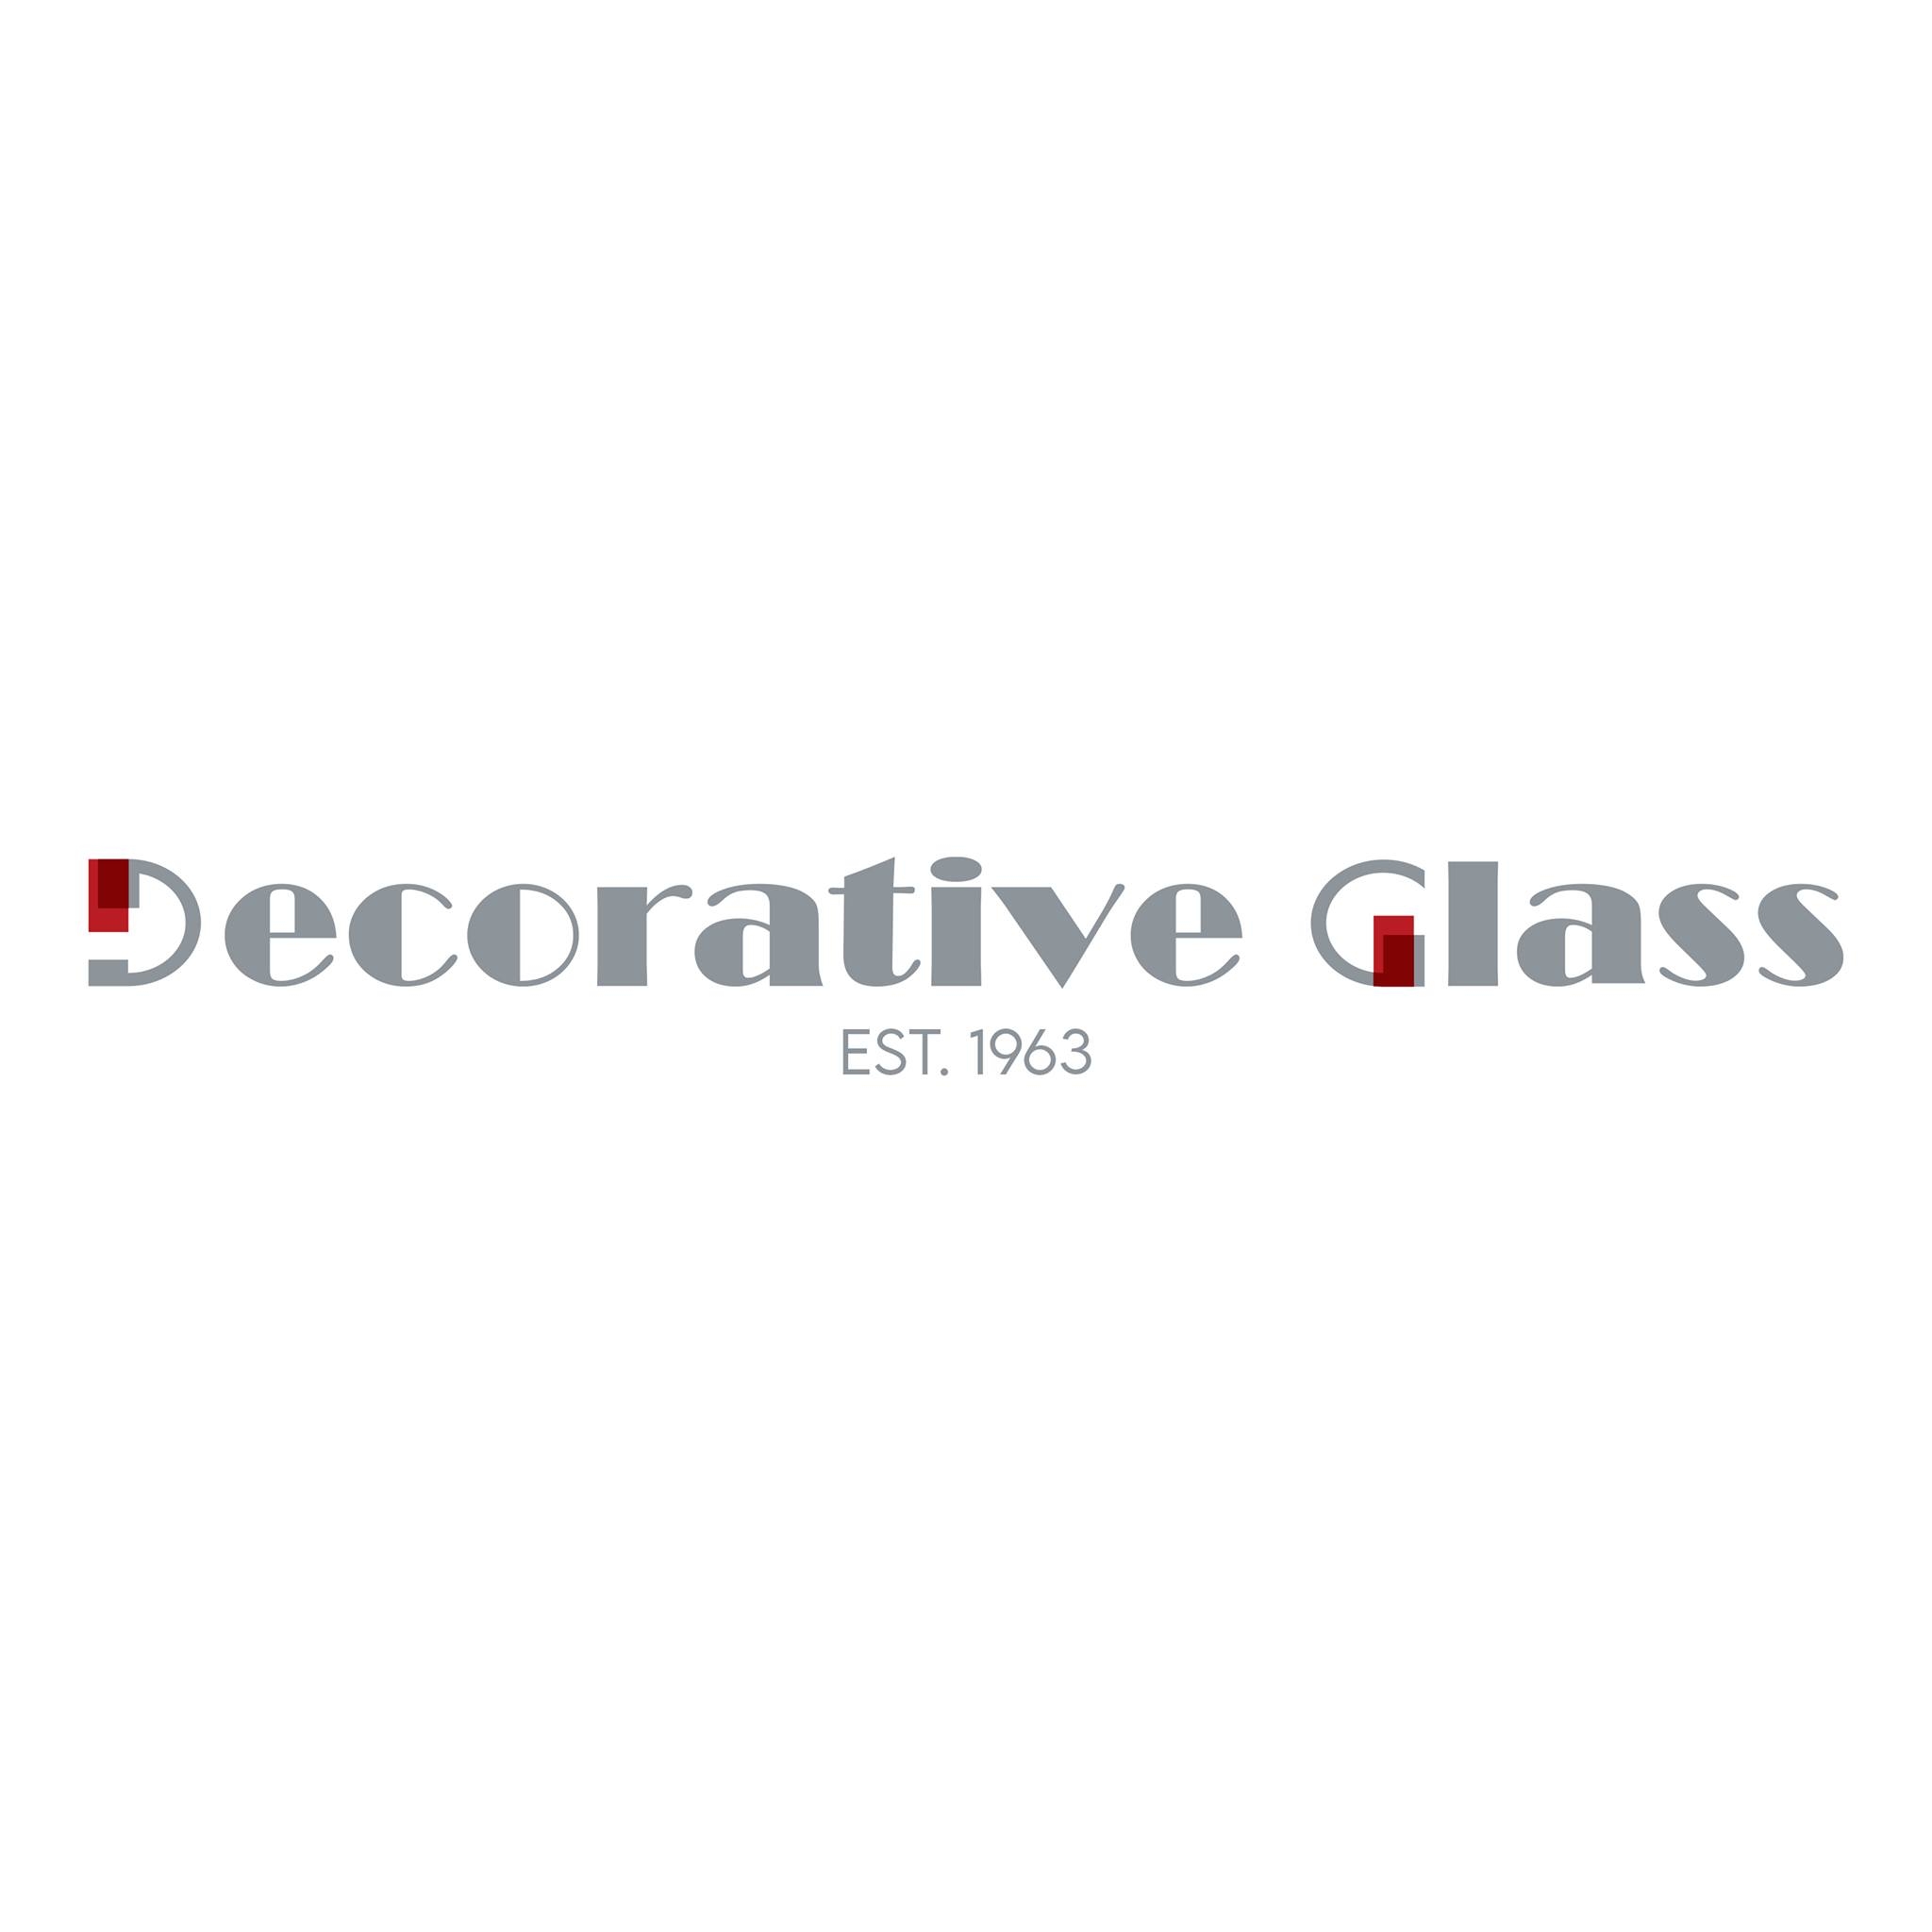 Decorative Glass - logo